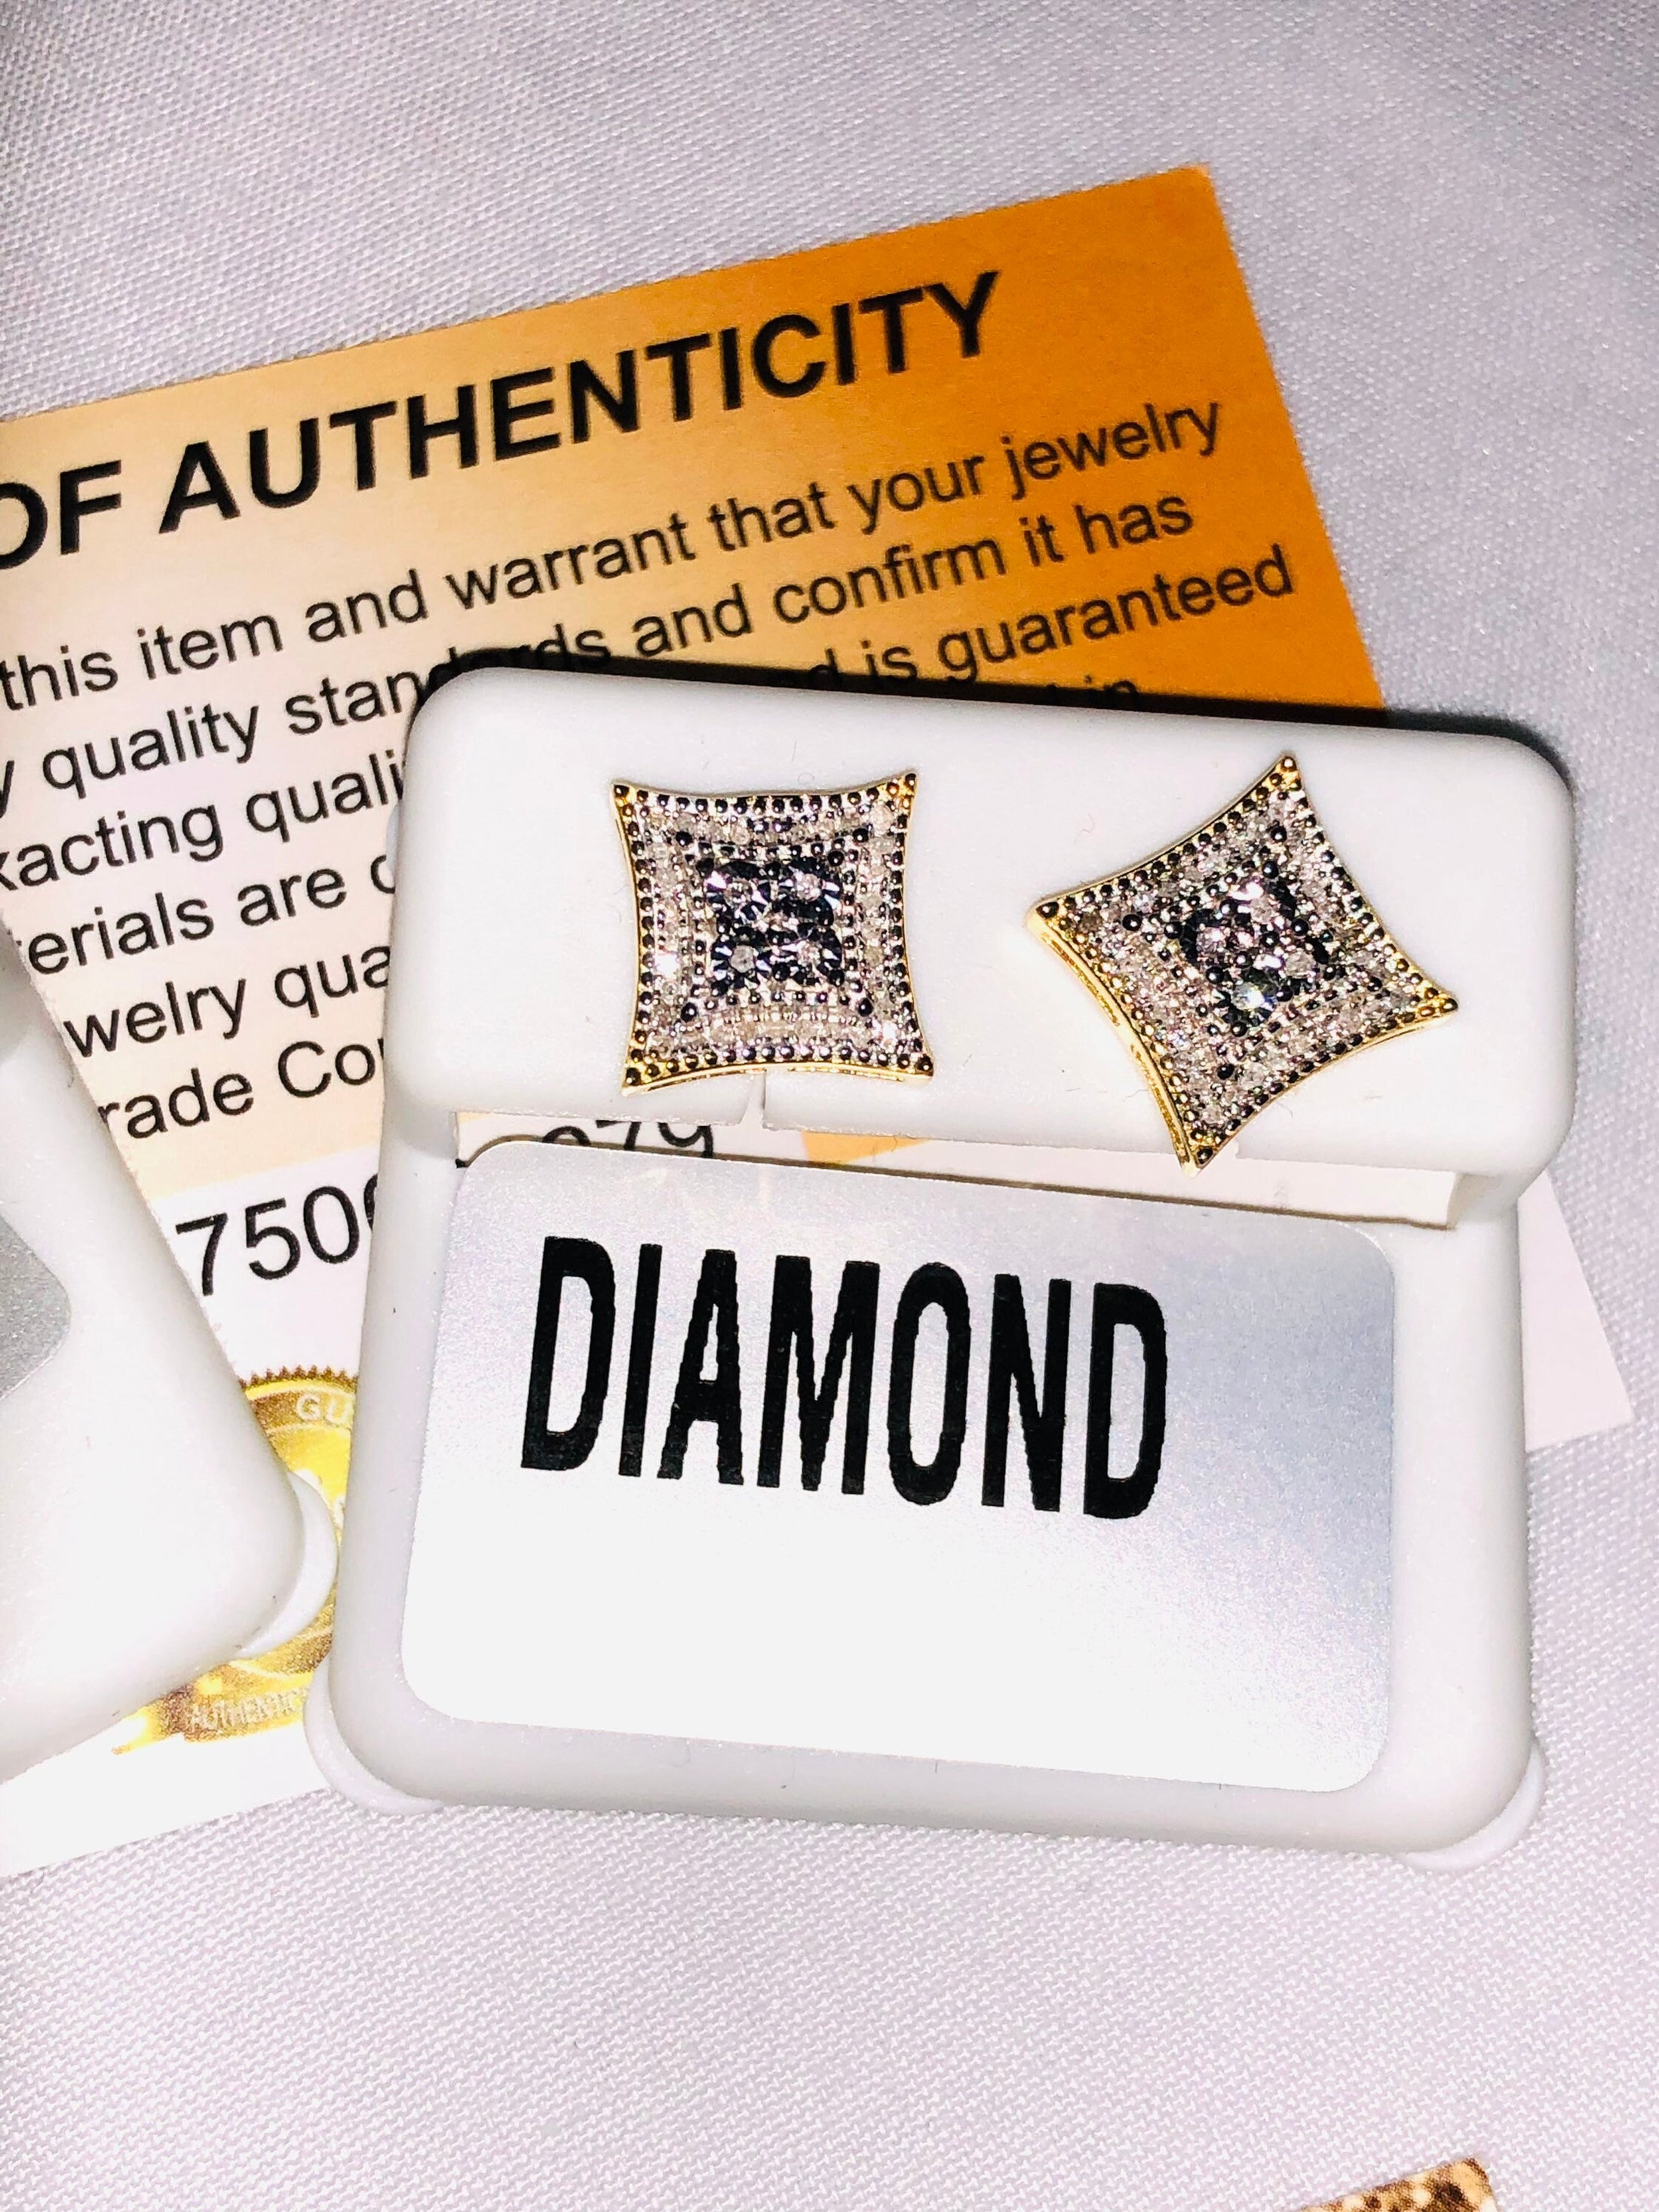 10k yellow gold vermeil beautiful custom designed real diamond earrings, Not CZ not lab made, 100% natural genuine diamond earrings, unisex,